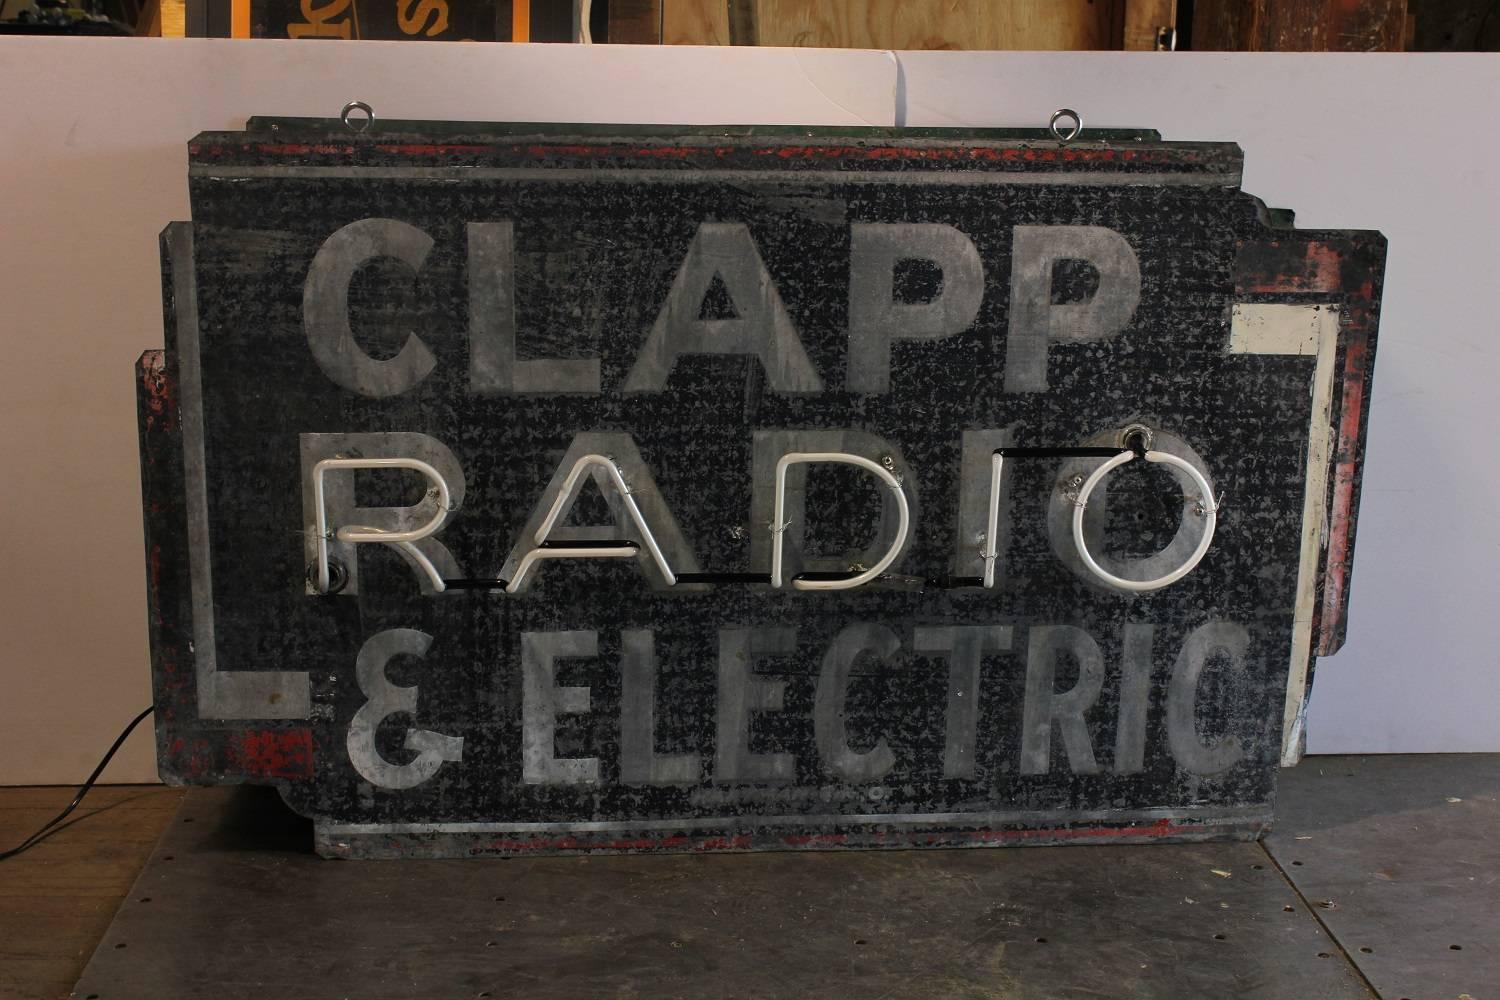 1930s RADIO neon sign.